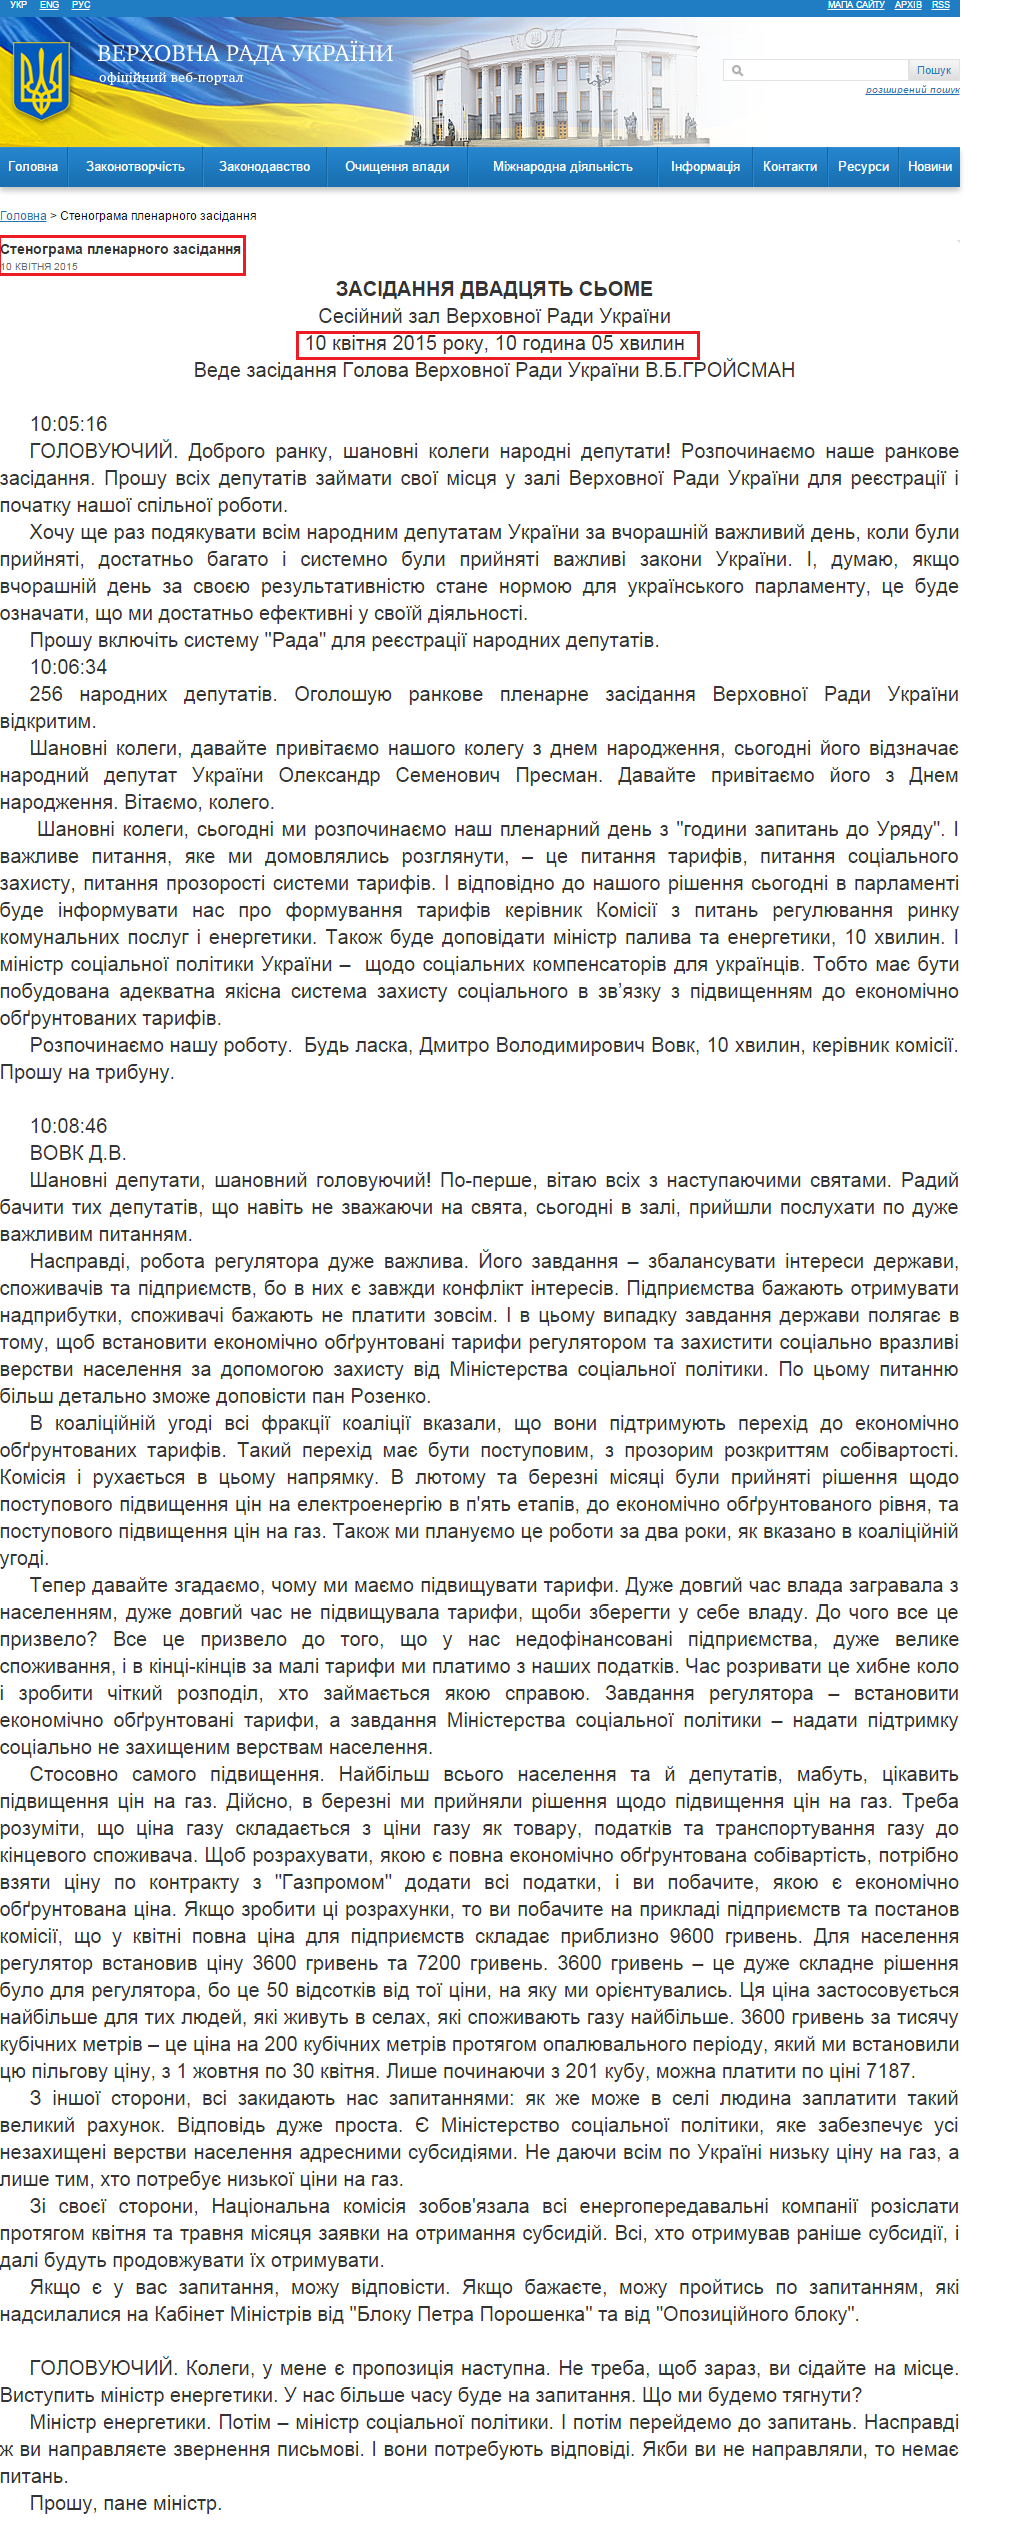 http://iportal.rada.gov.ua/meeting/stenogr/show/5847.html